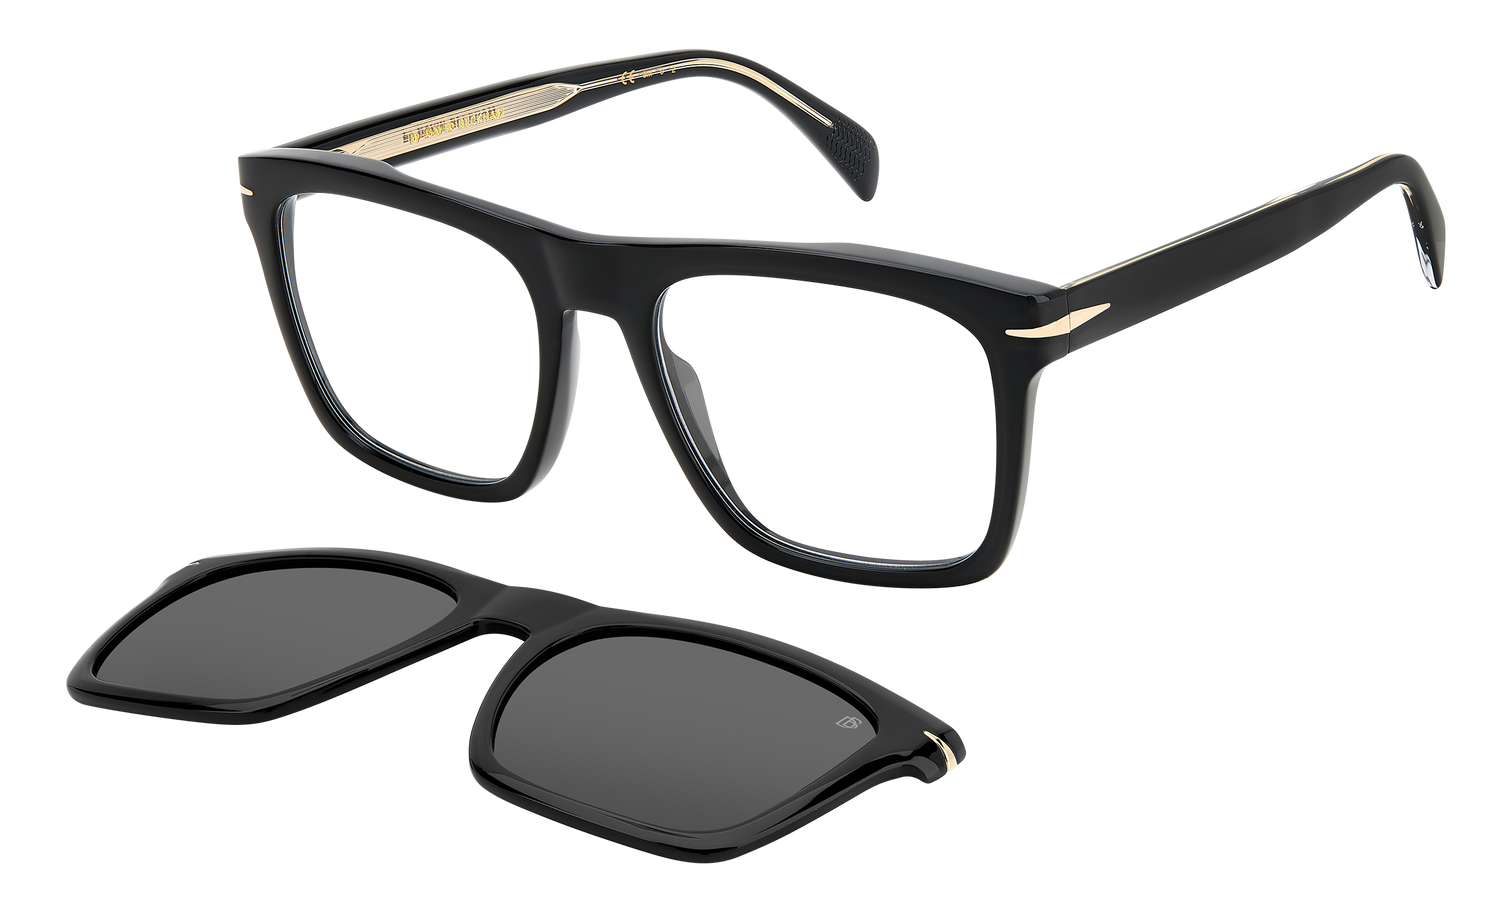 David Beckham Prescription Glasses | SmartBuyGlasses UK